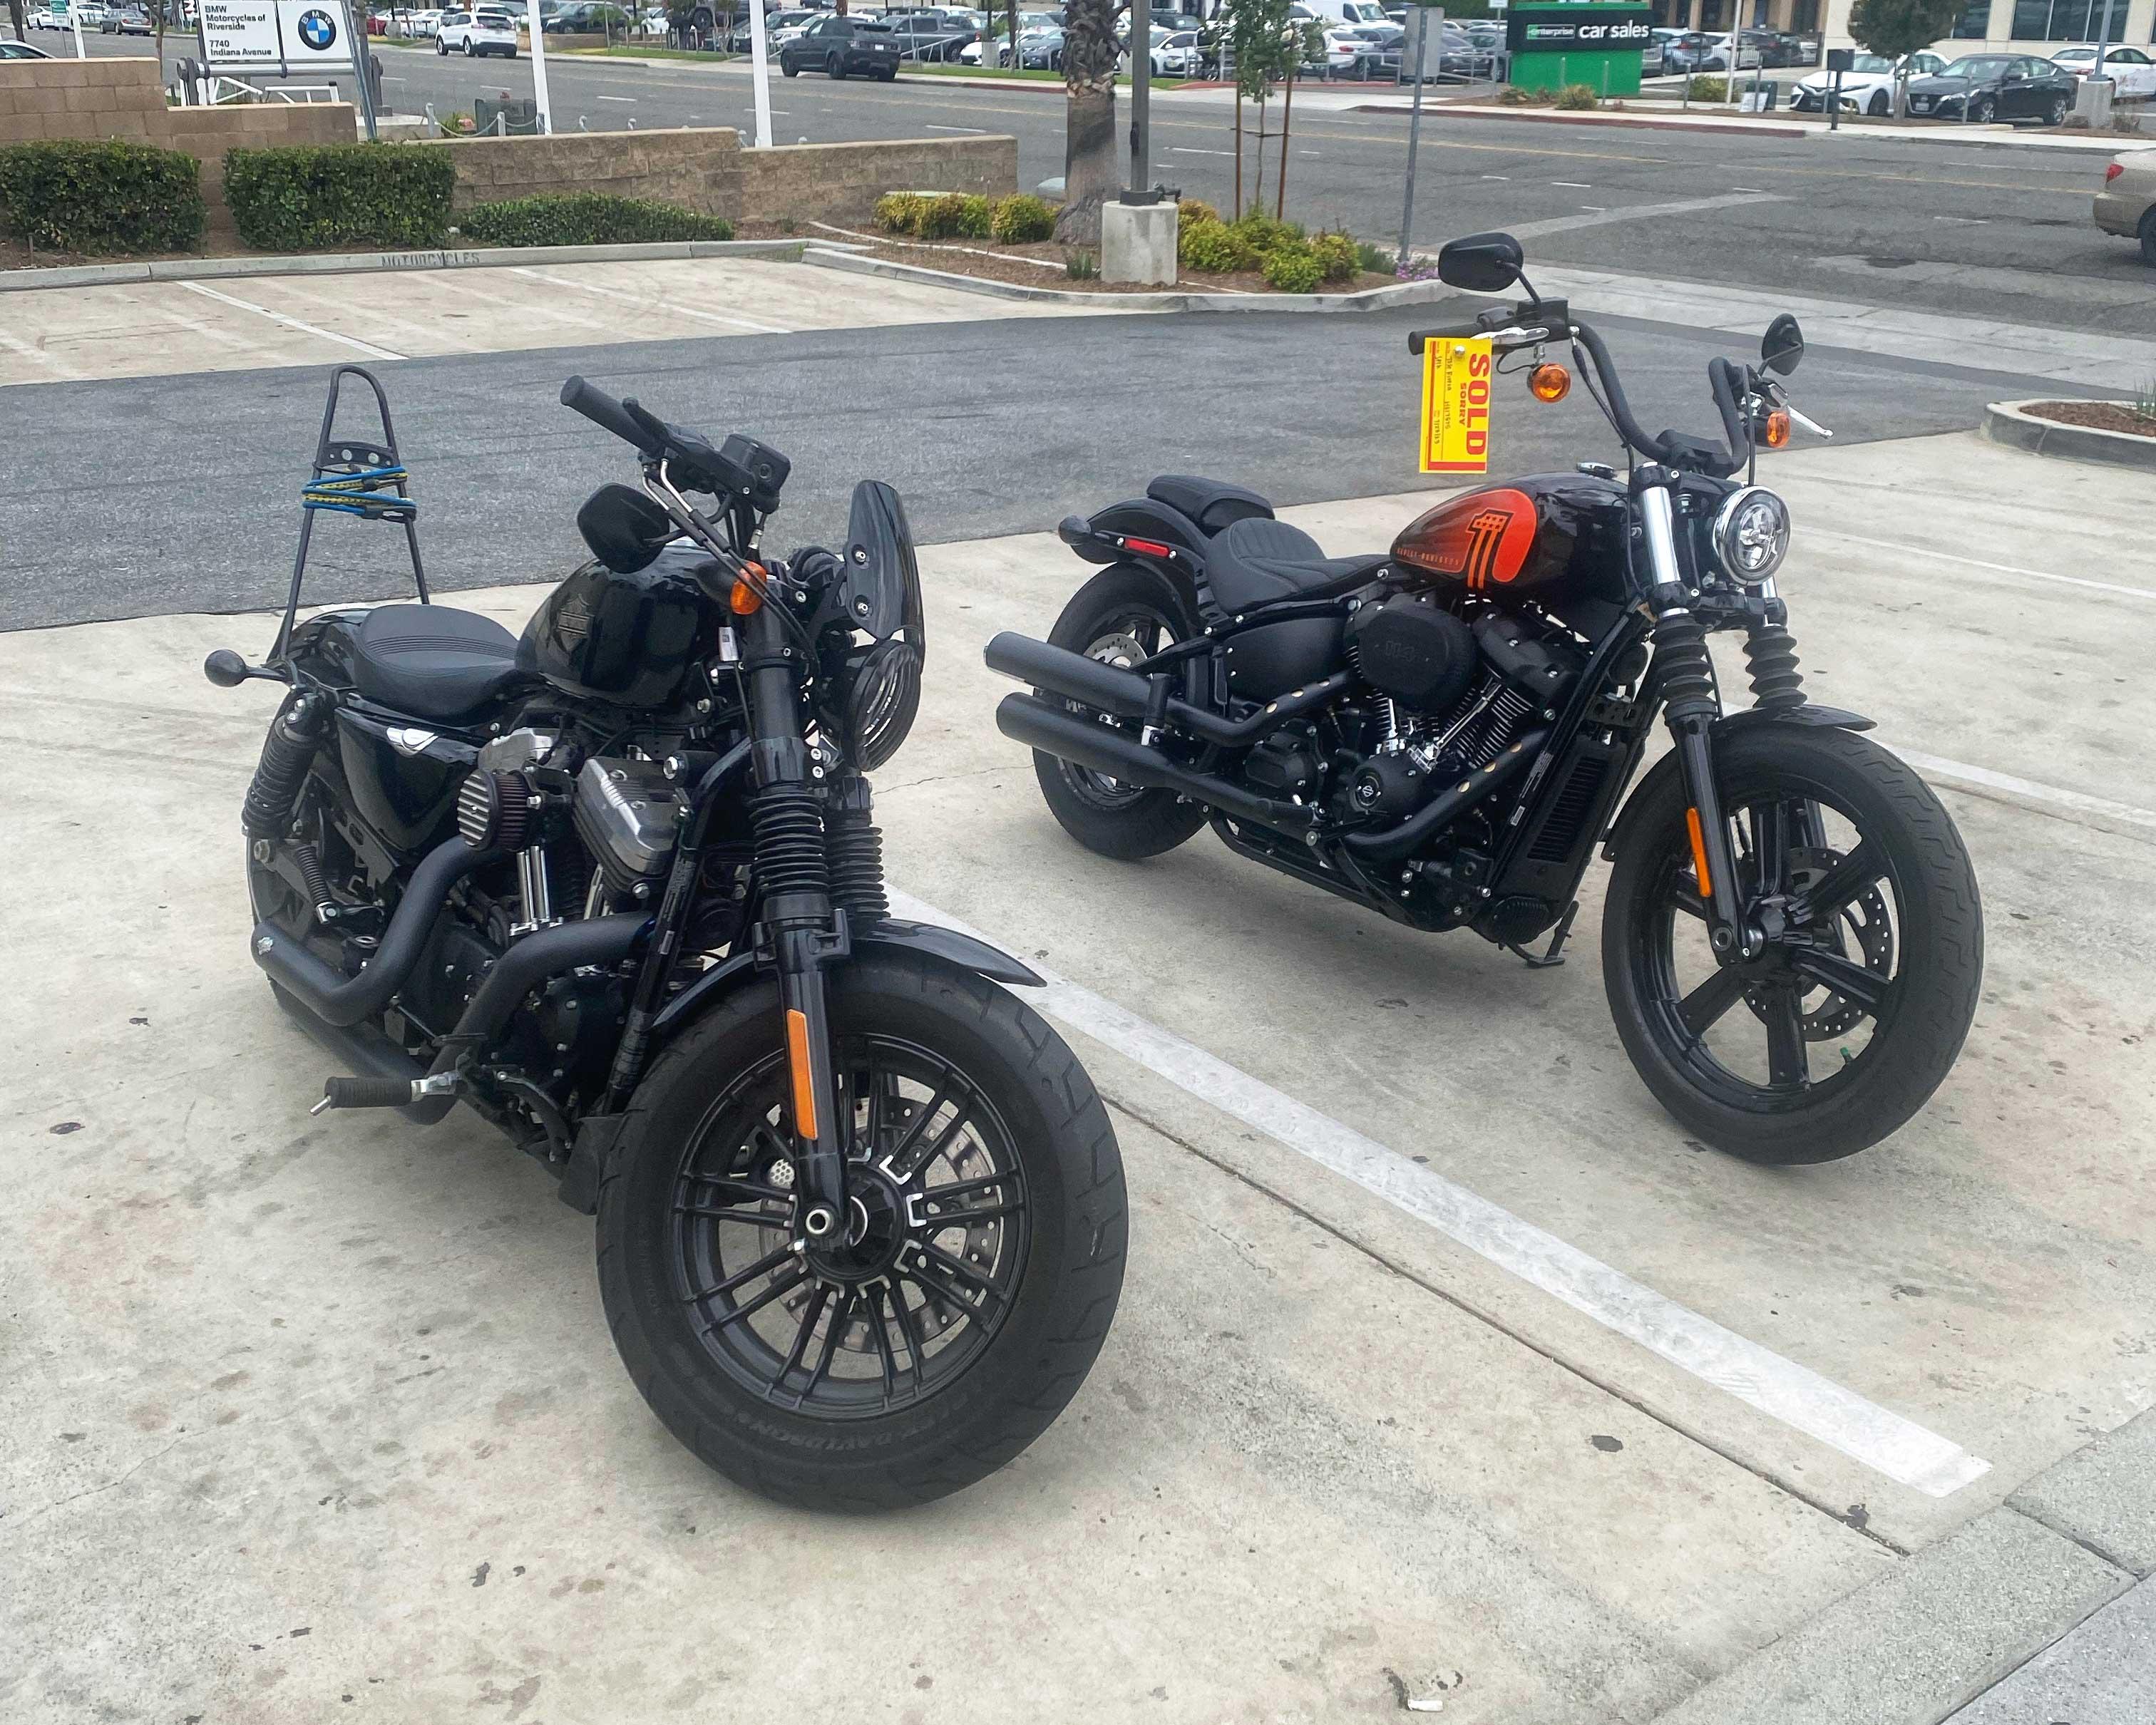 Harley Davidson Sportster 48 (left), Harley Davidson Street Bob (right)